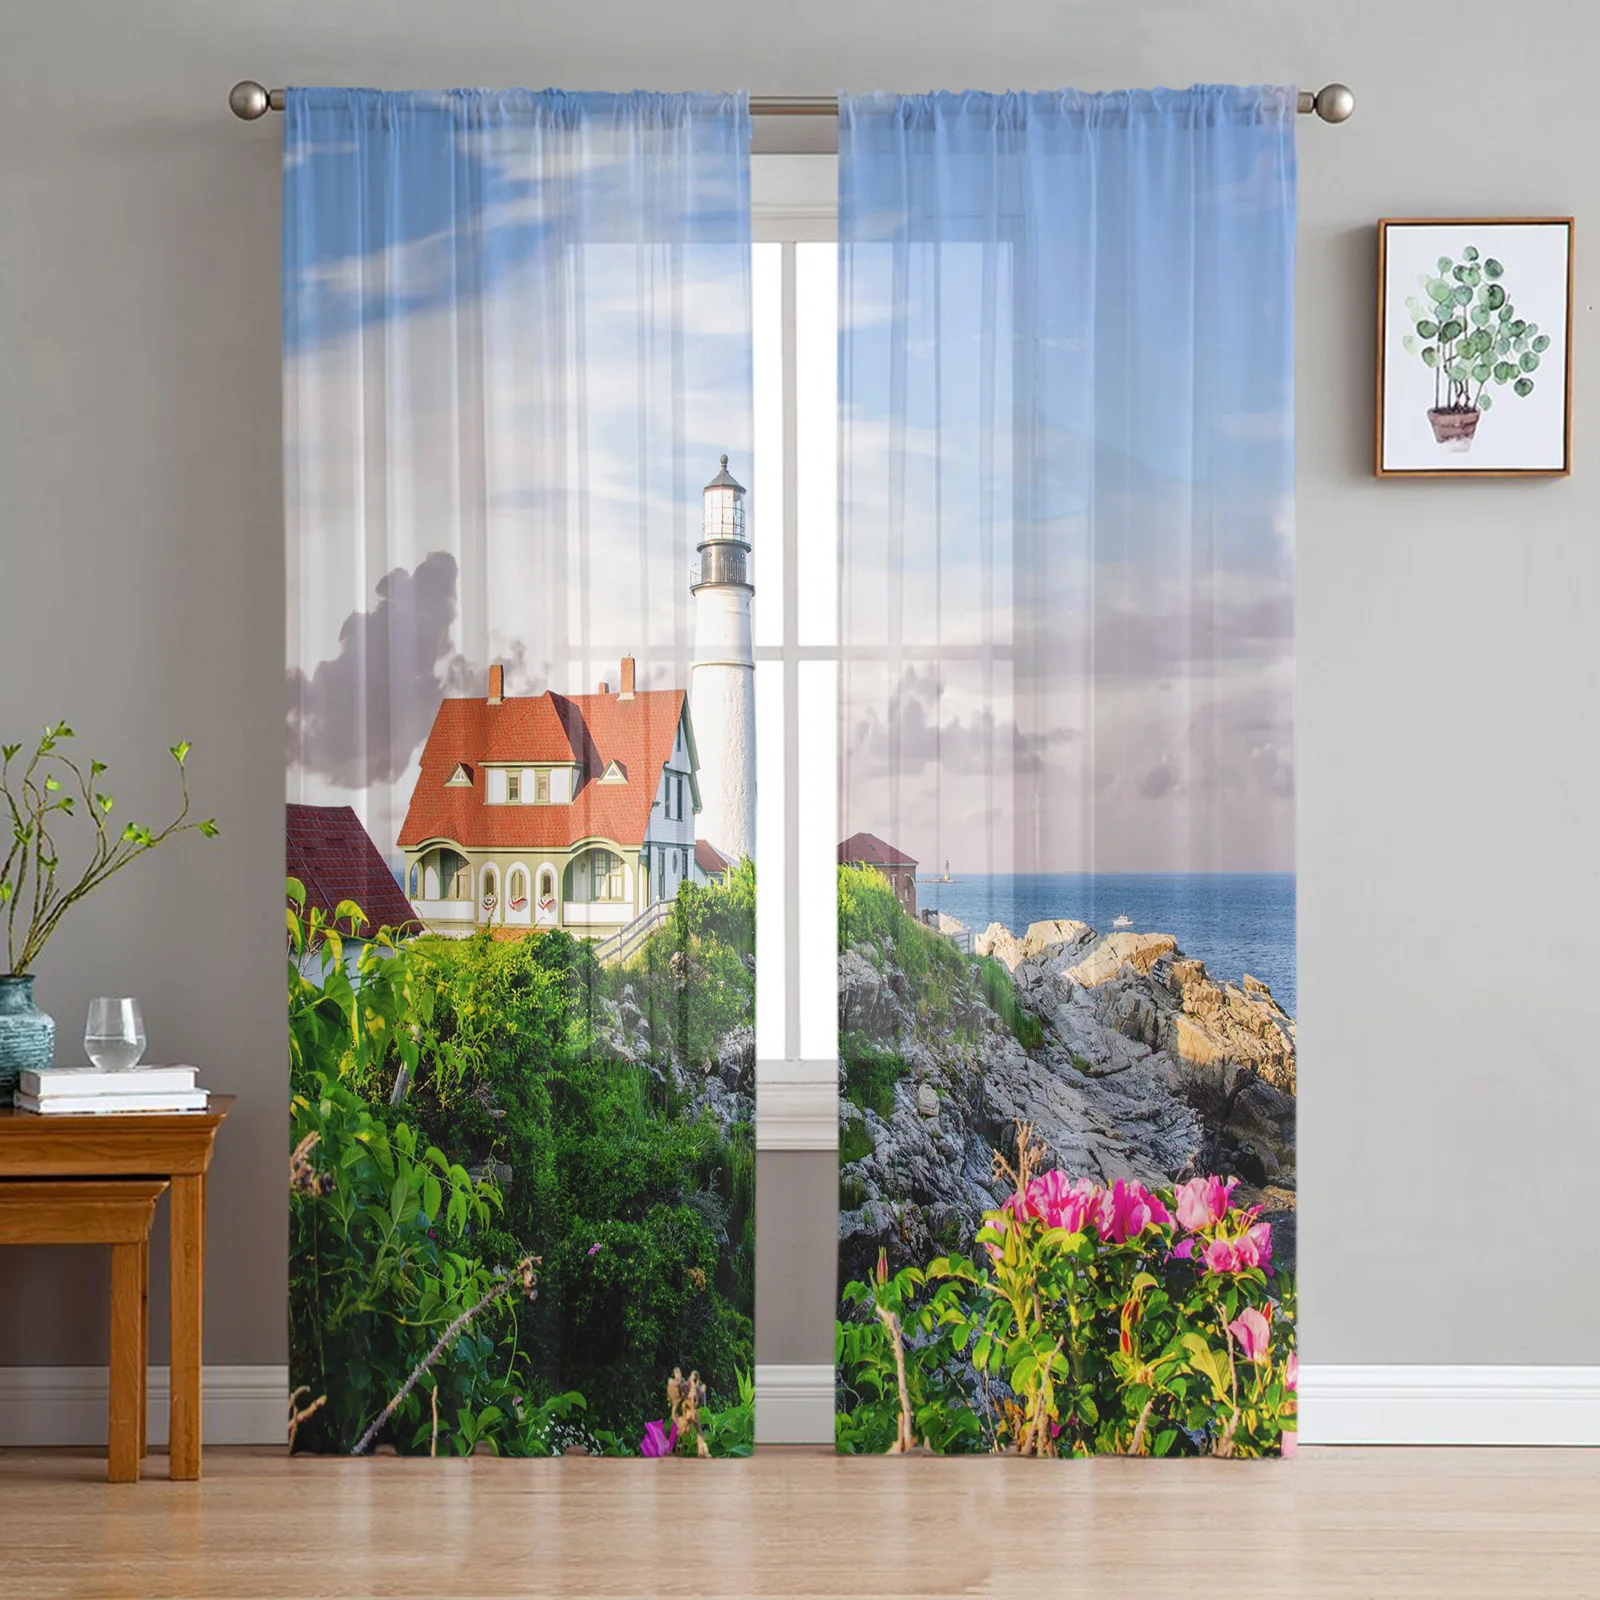 Flower Lighthouse Seaside Cottage Sheer Curtains for Living Room Bedroom Kitchen Tulle for Windows Voile Drapes Home Decoration